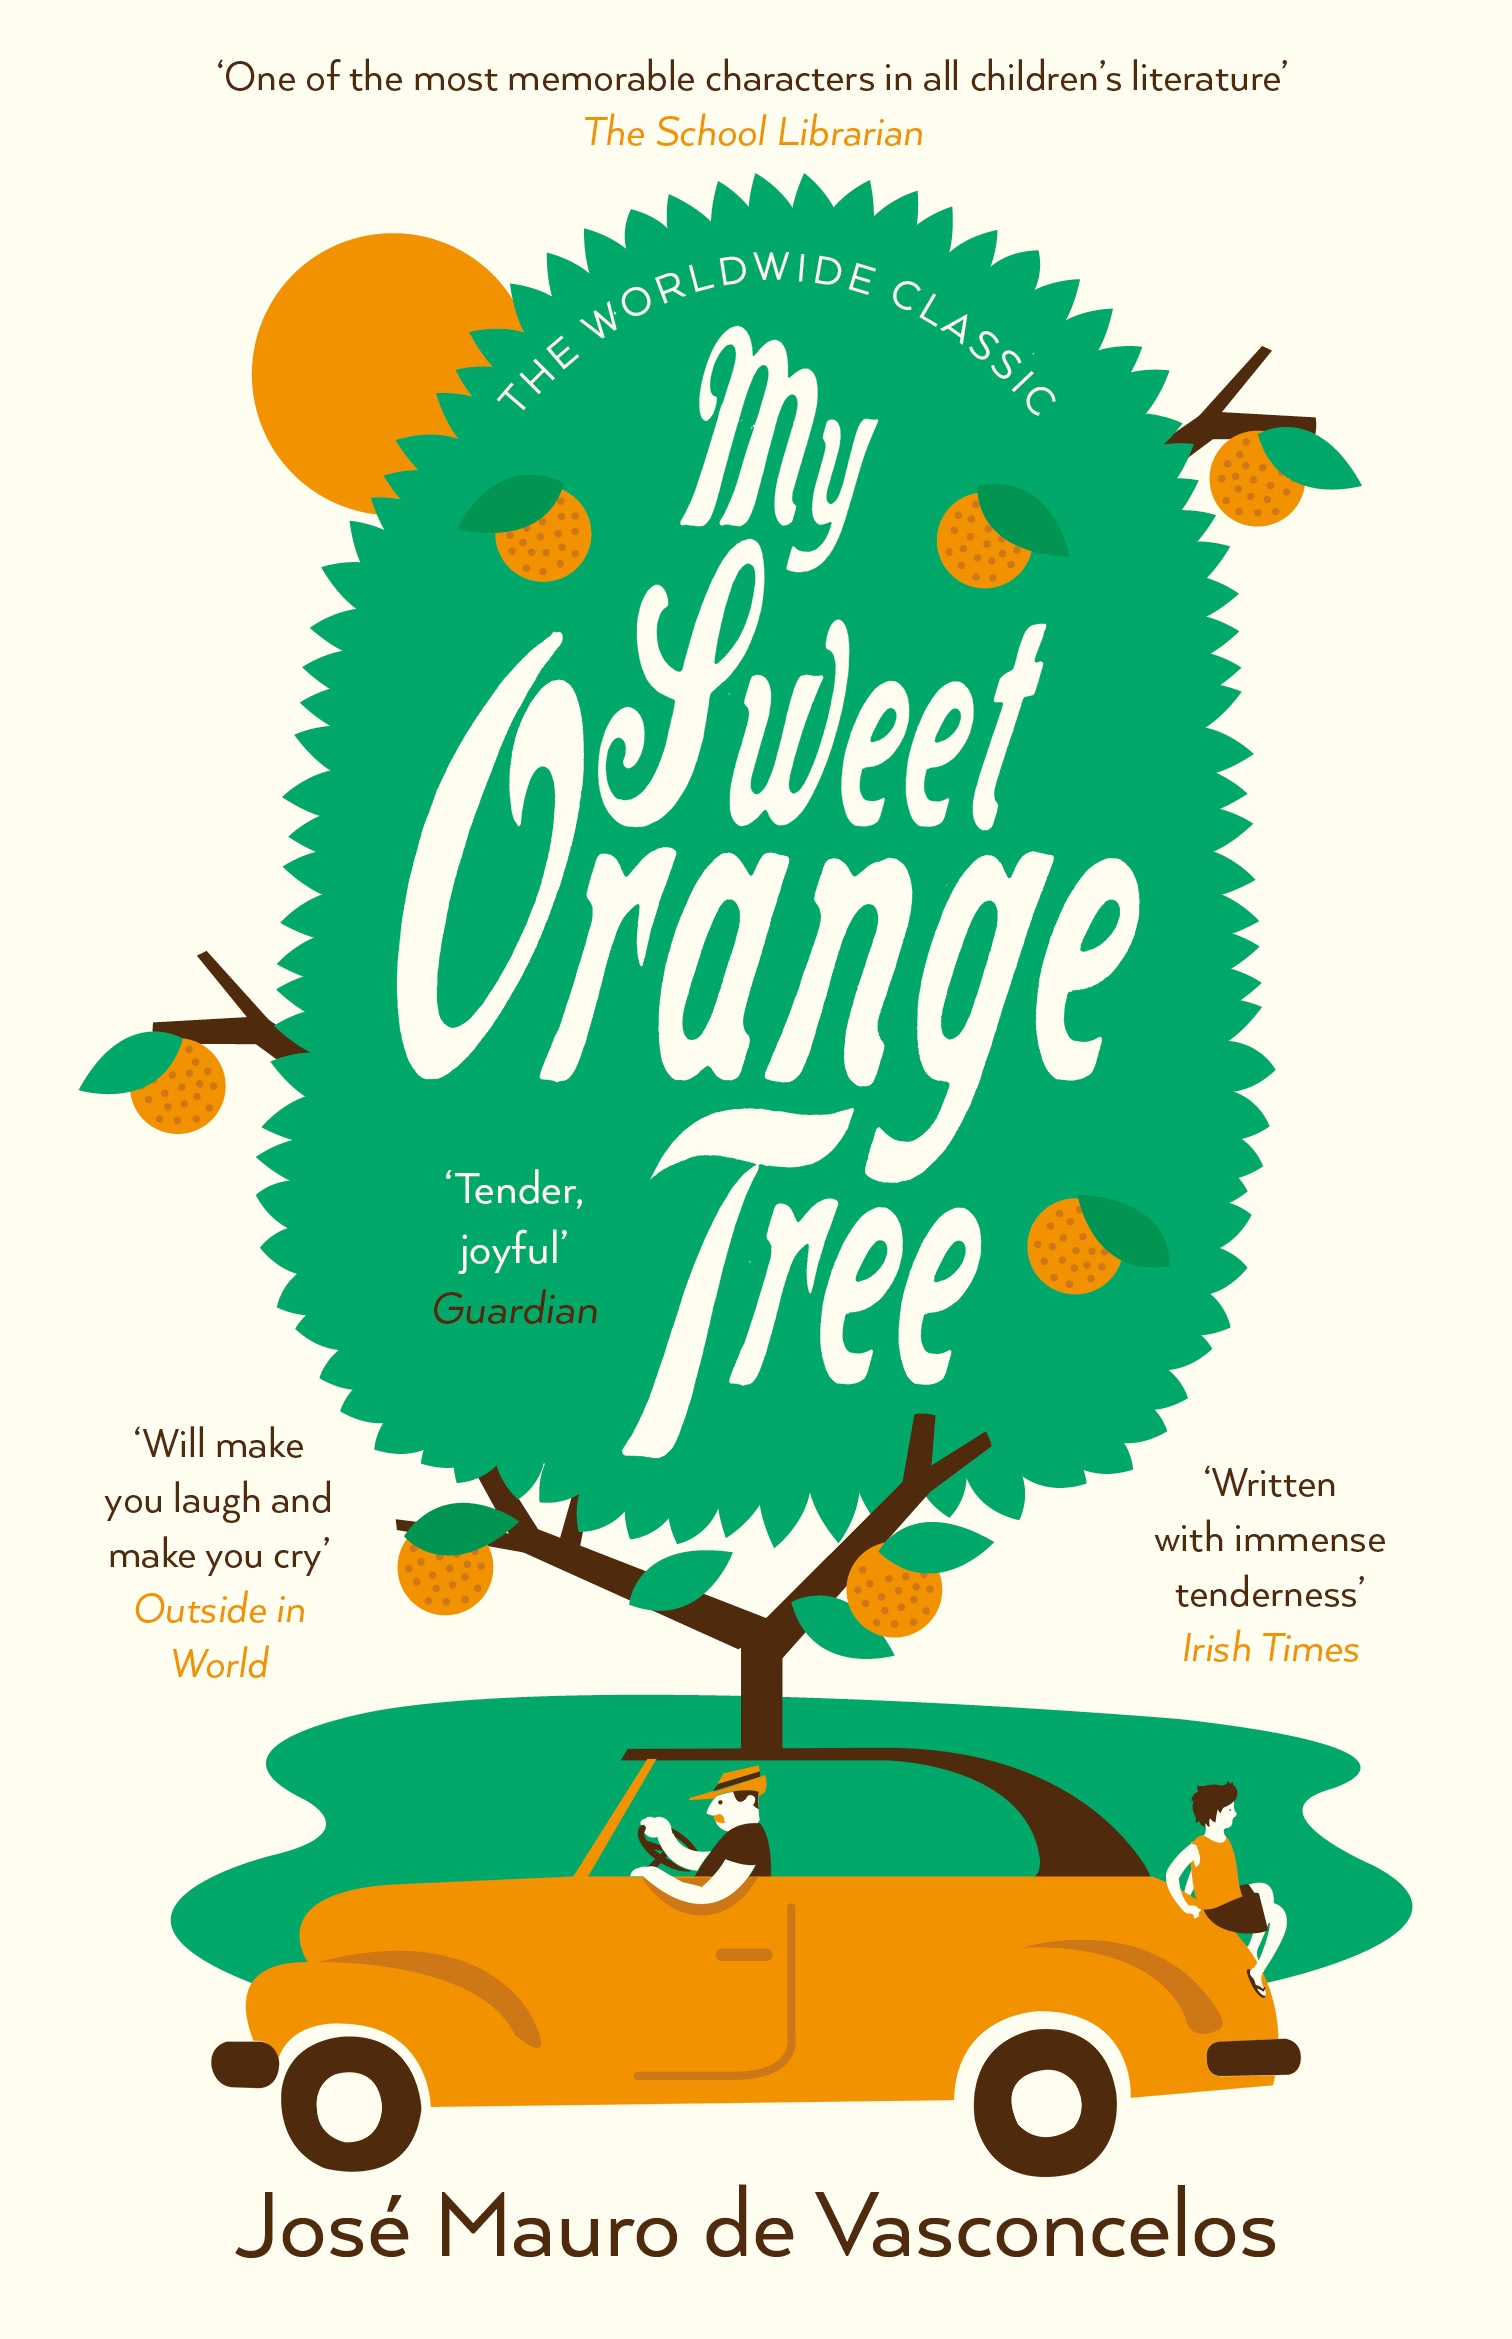 Tiểu thuyết tiếng Anh: My Sweet Orange Tree